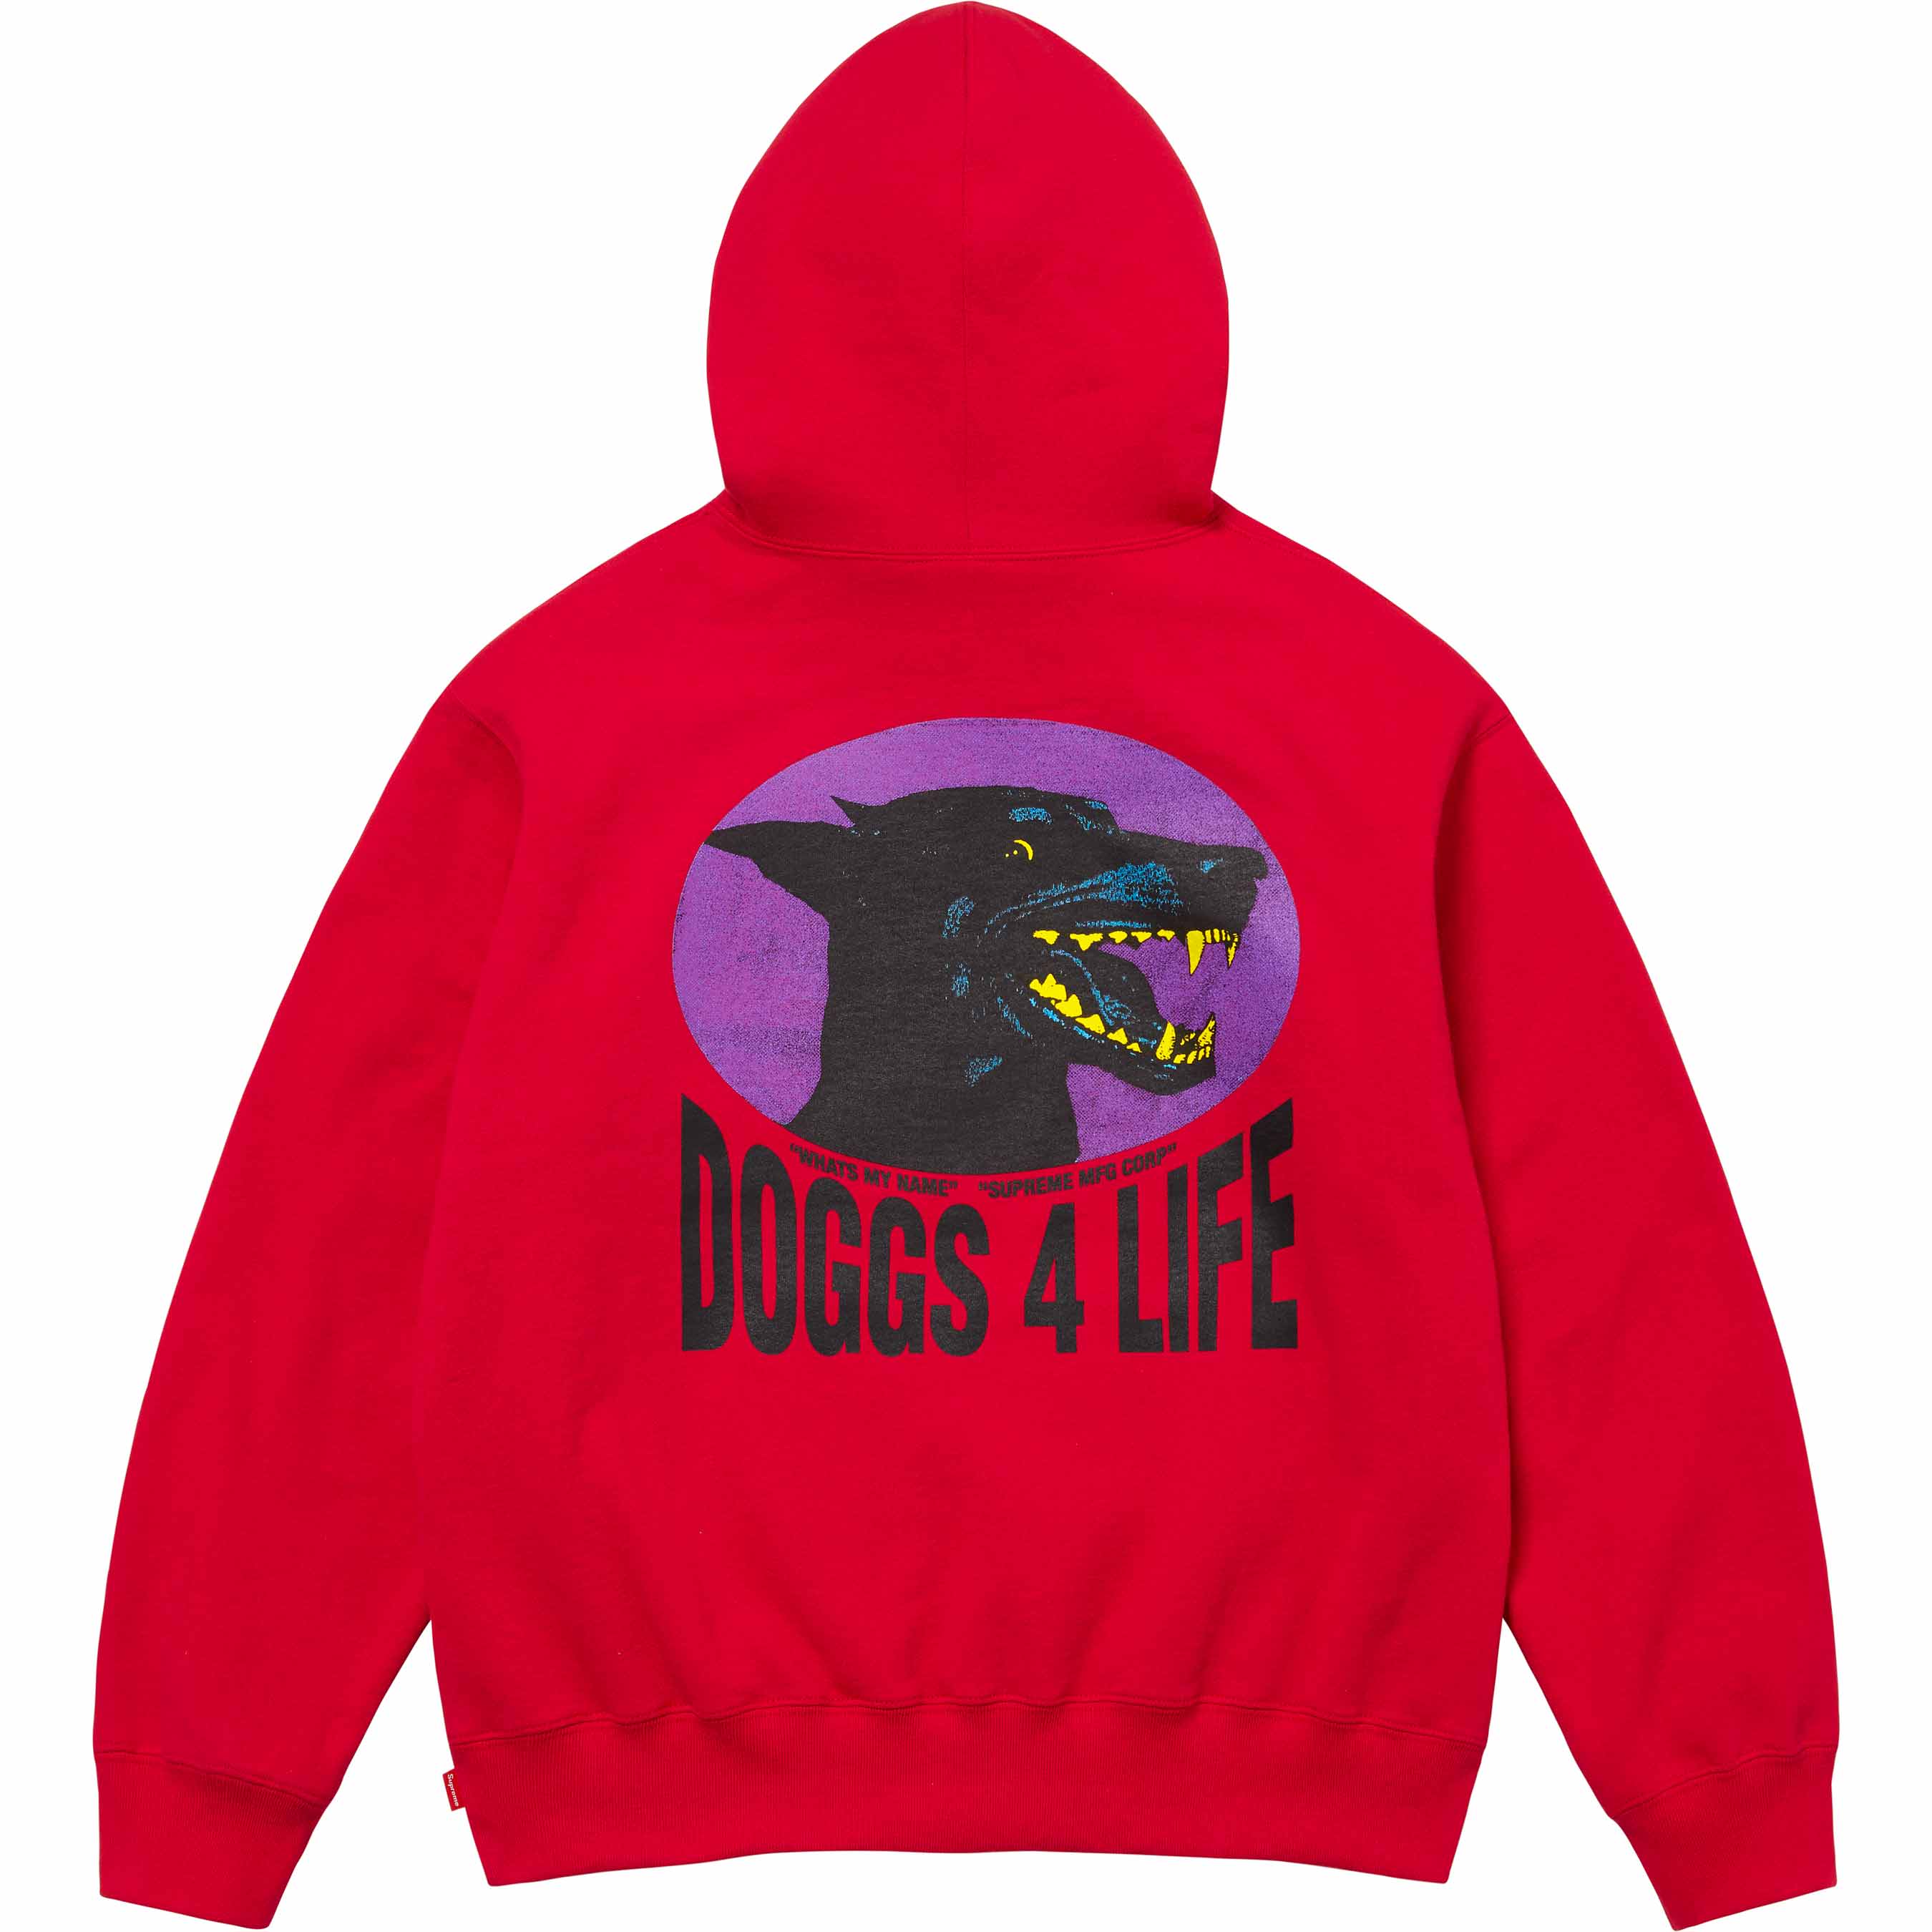 Doggs Hooded Sweatshirt